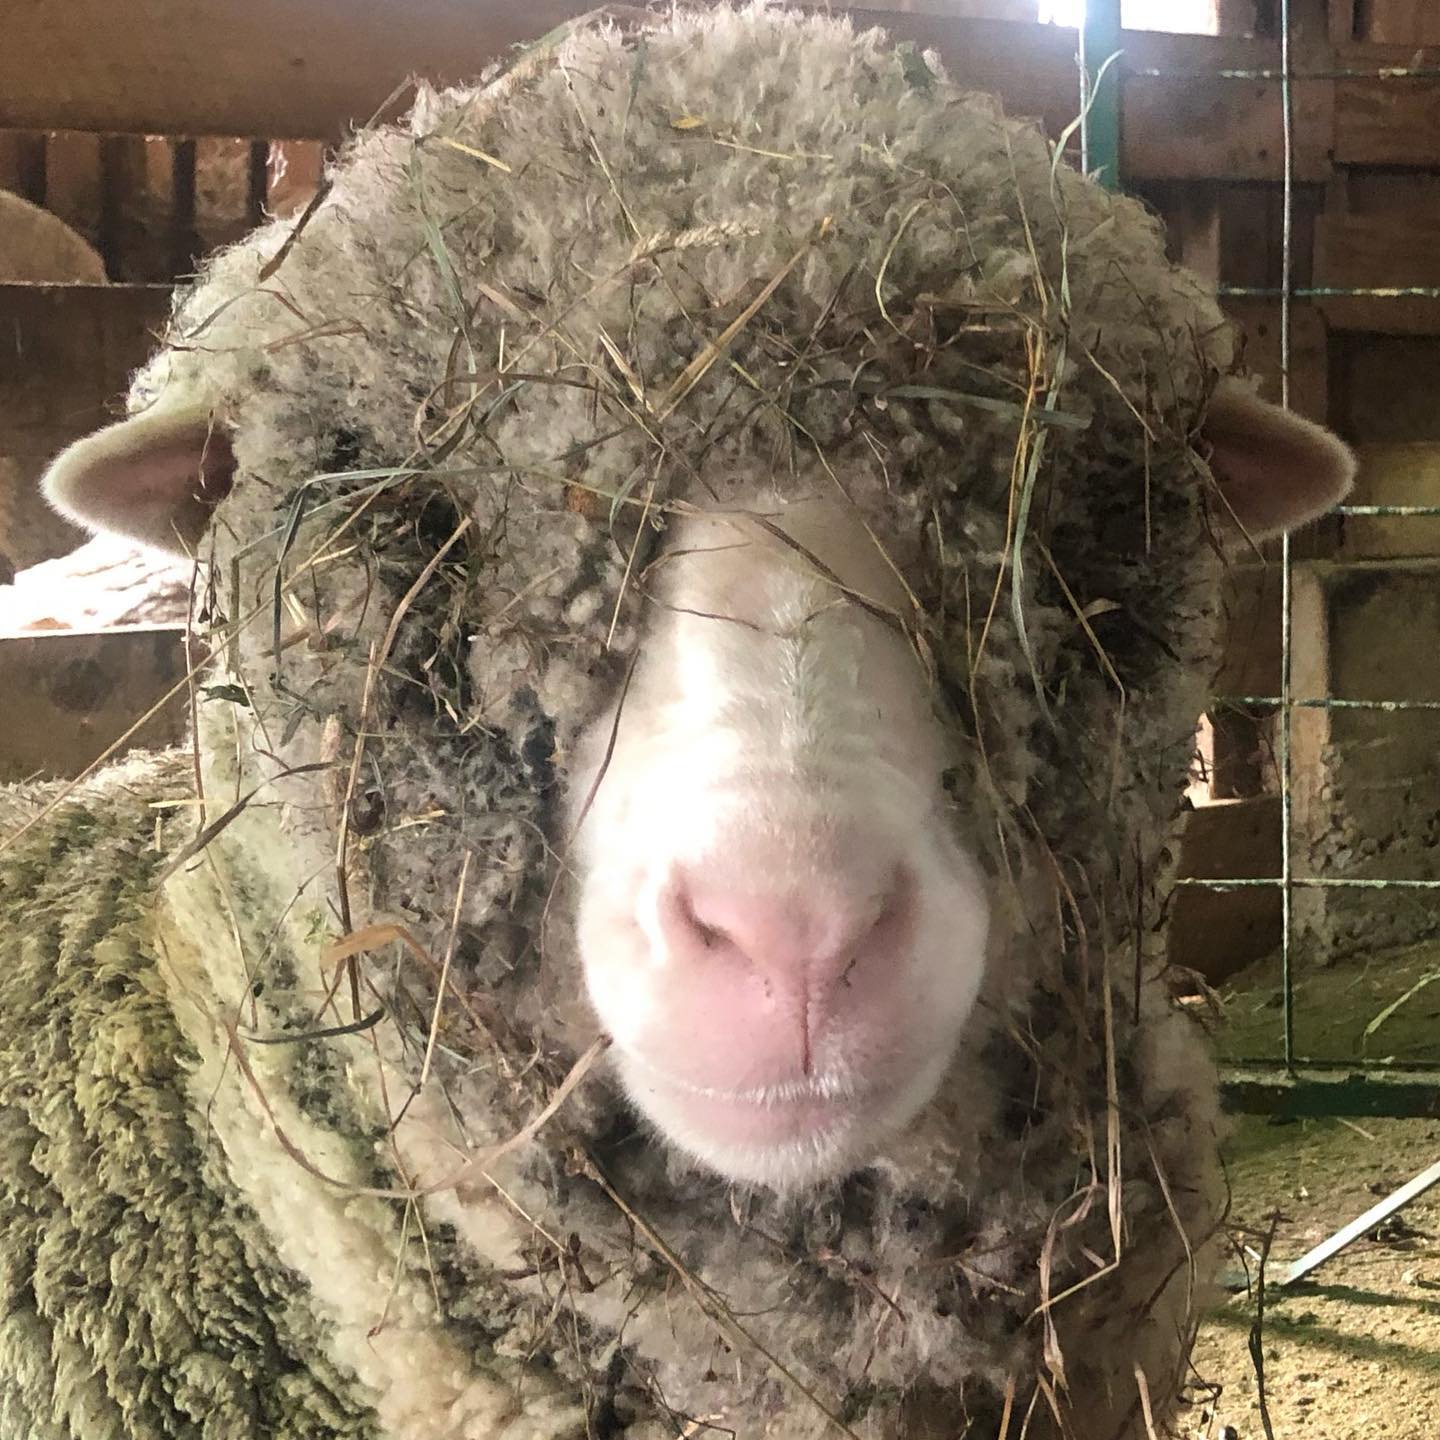 Sheep reared in Lana Plantae Alpaca and Sheep Farm